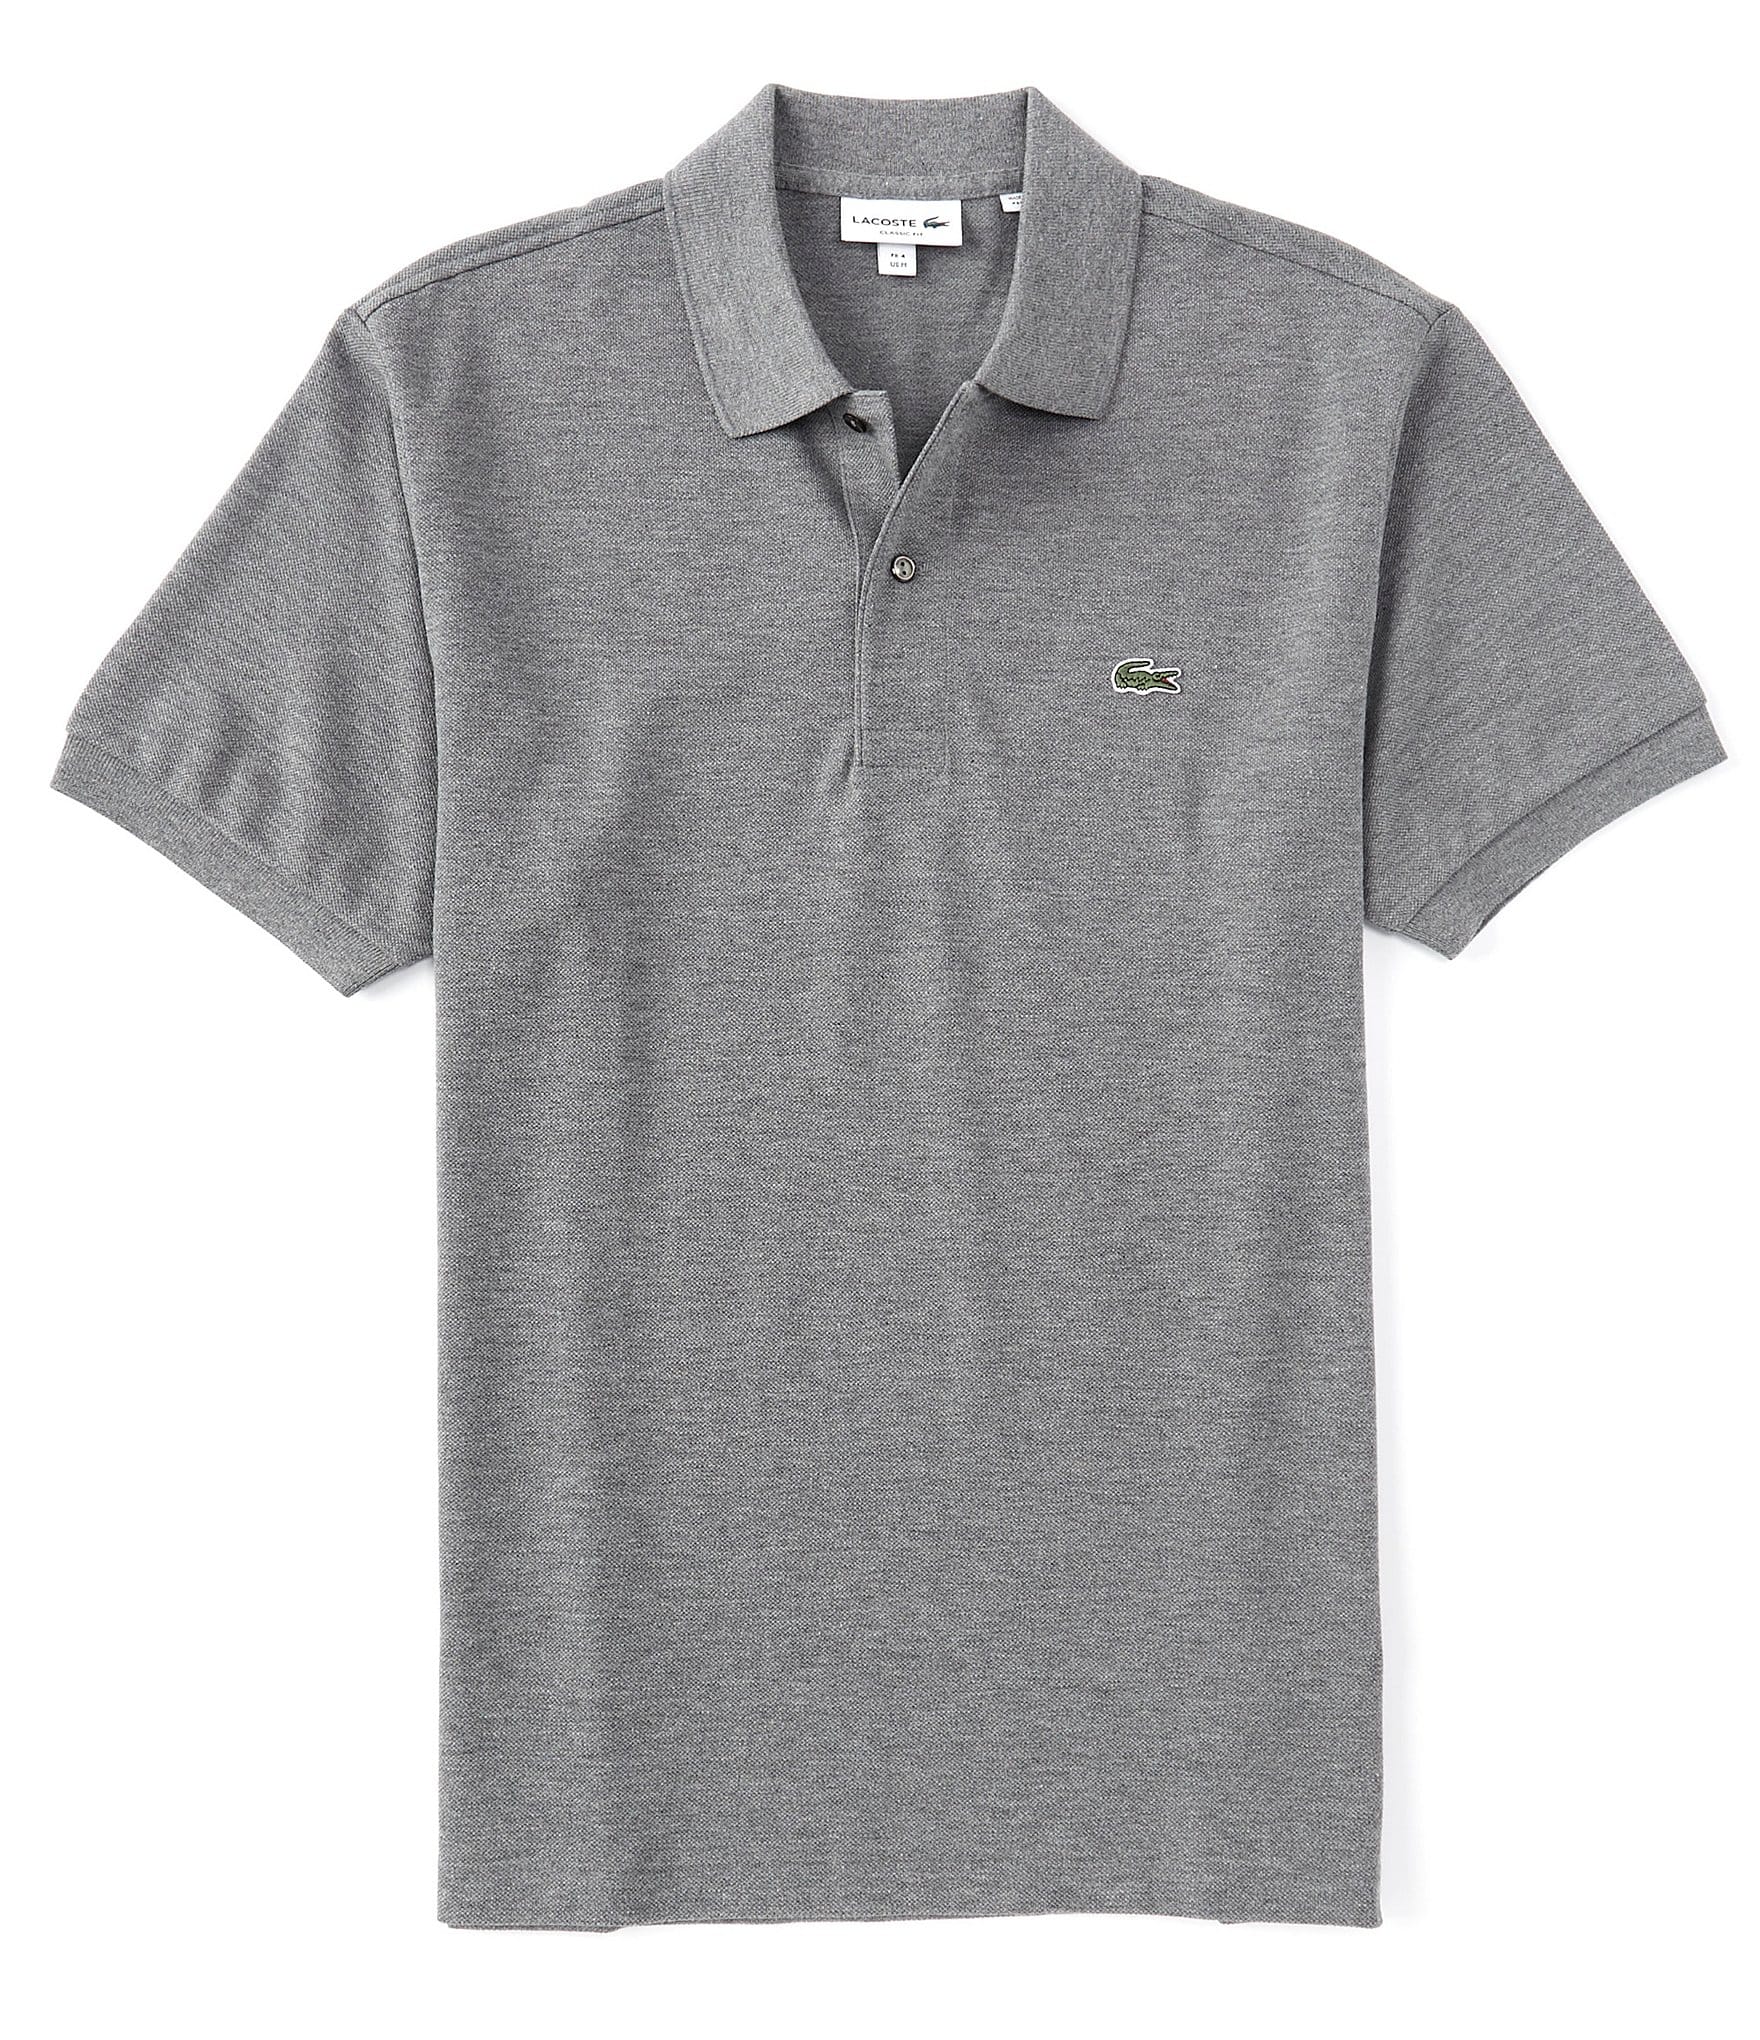 Lacoste Classic Chine Short Sleeve Polo Shirt Dillard's